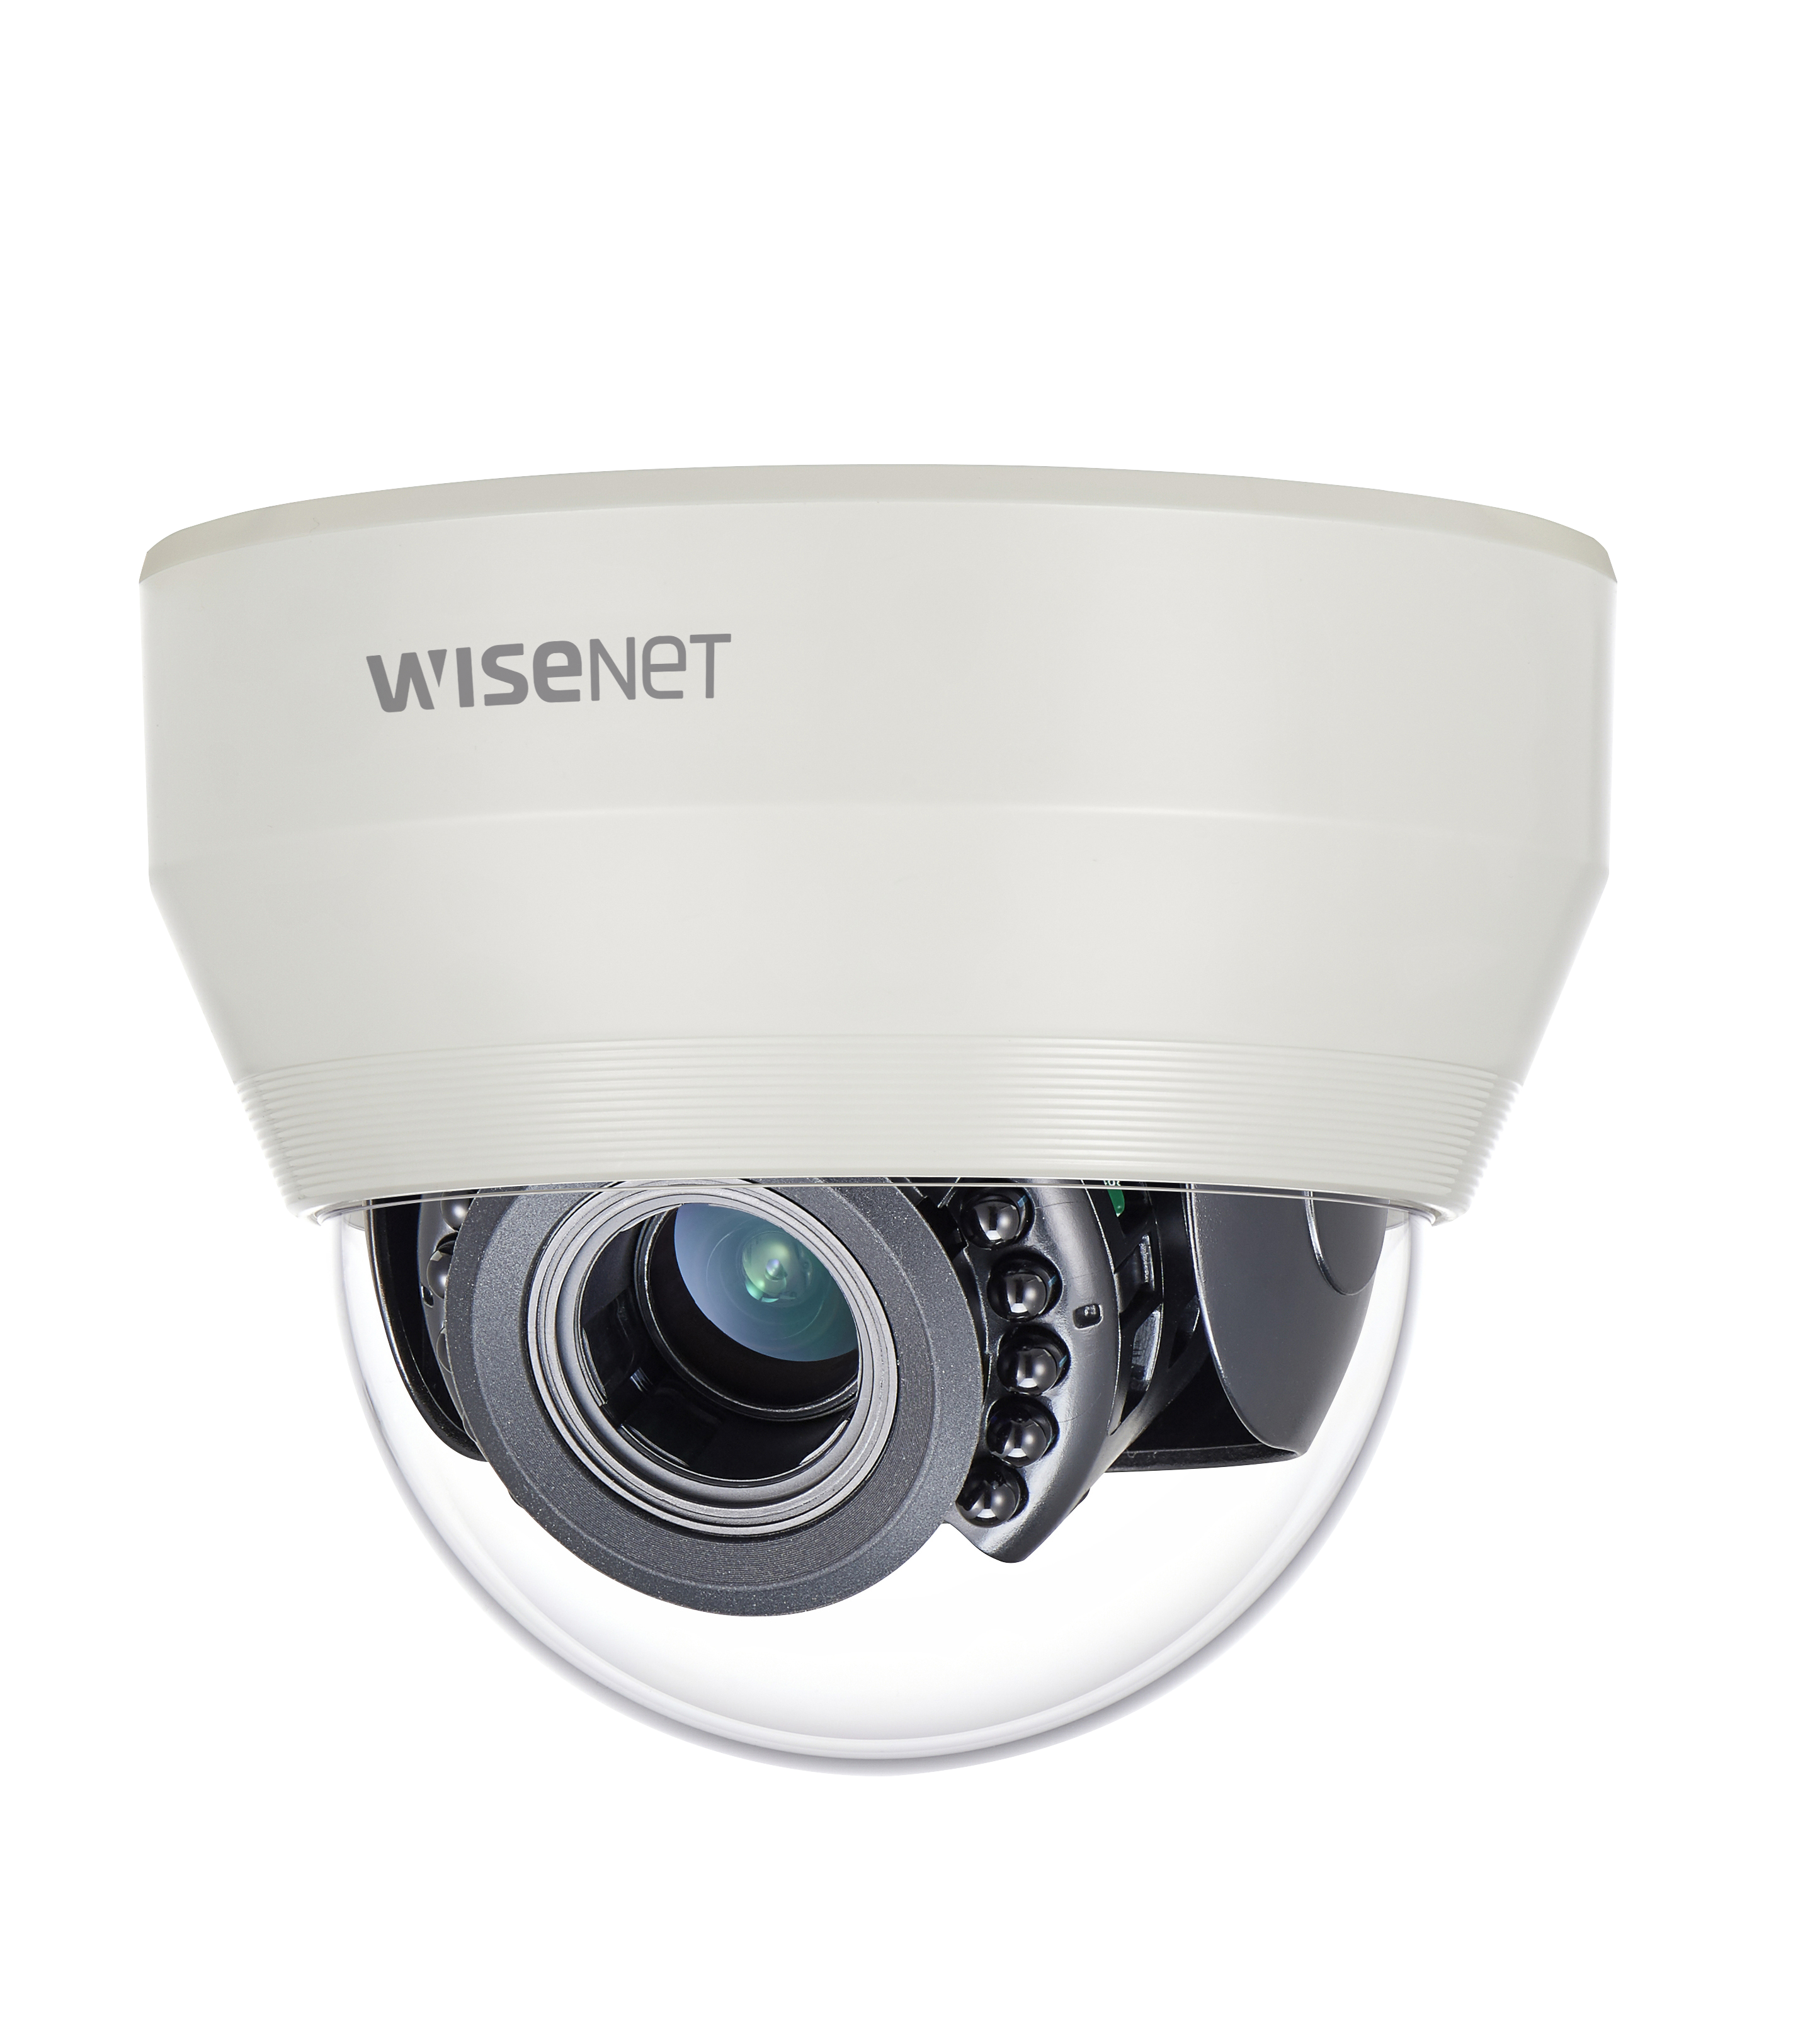 Hanwha Wisenet HCD-7070R QHD (4MP) Analog IR Dome CCTV Camera (Clearance)